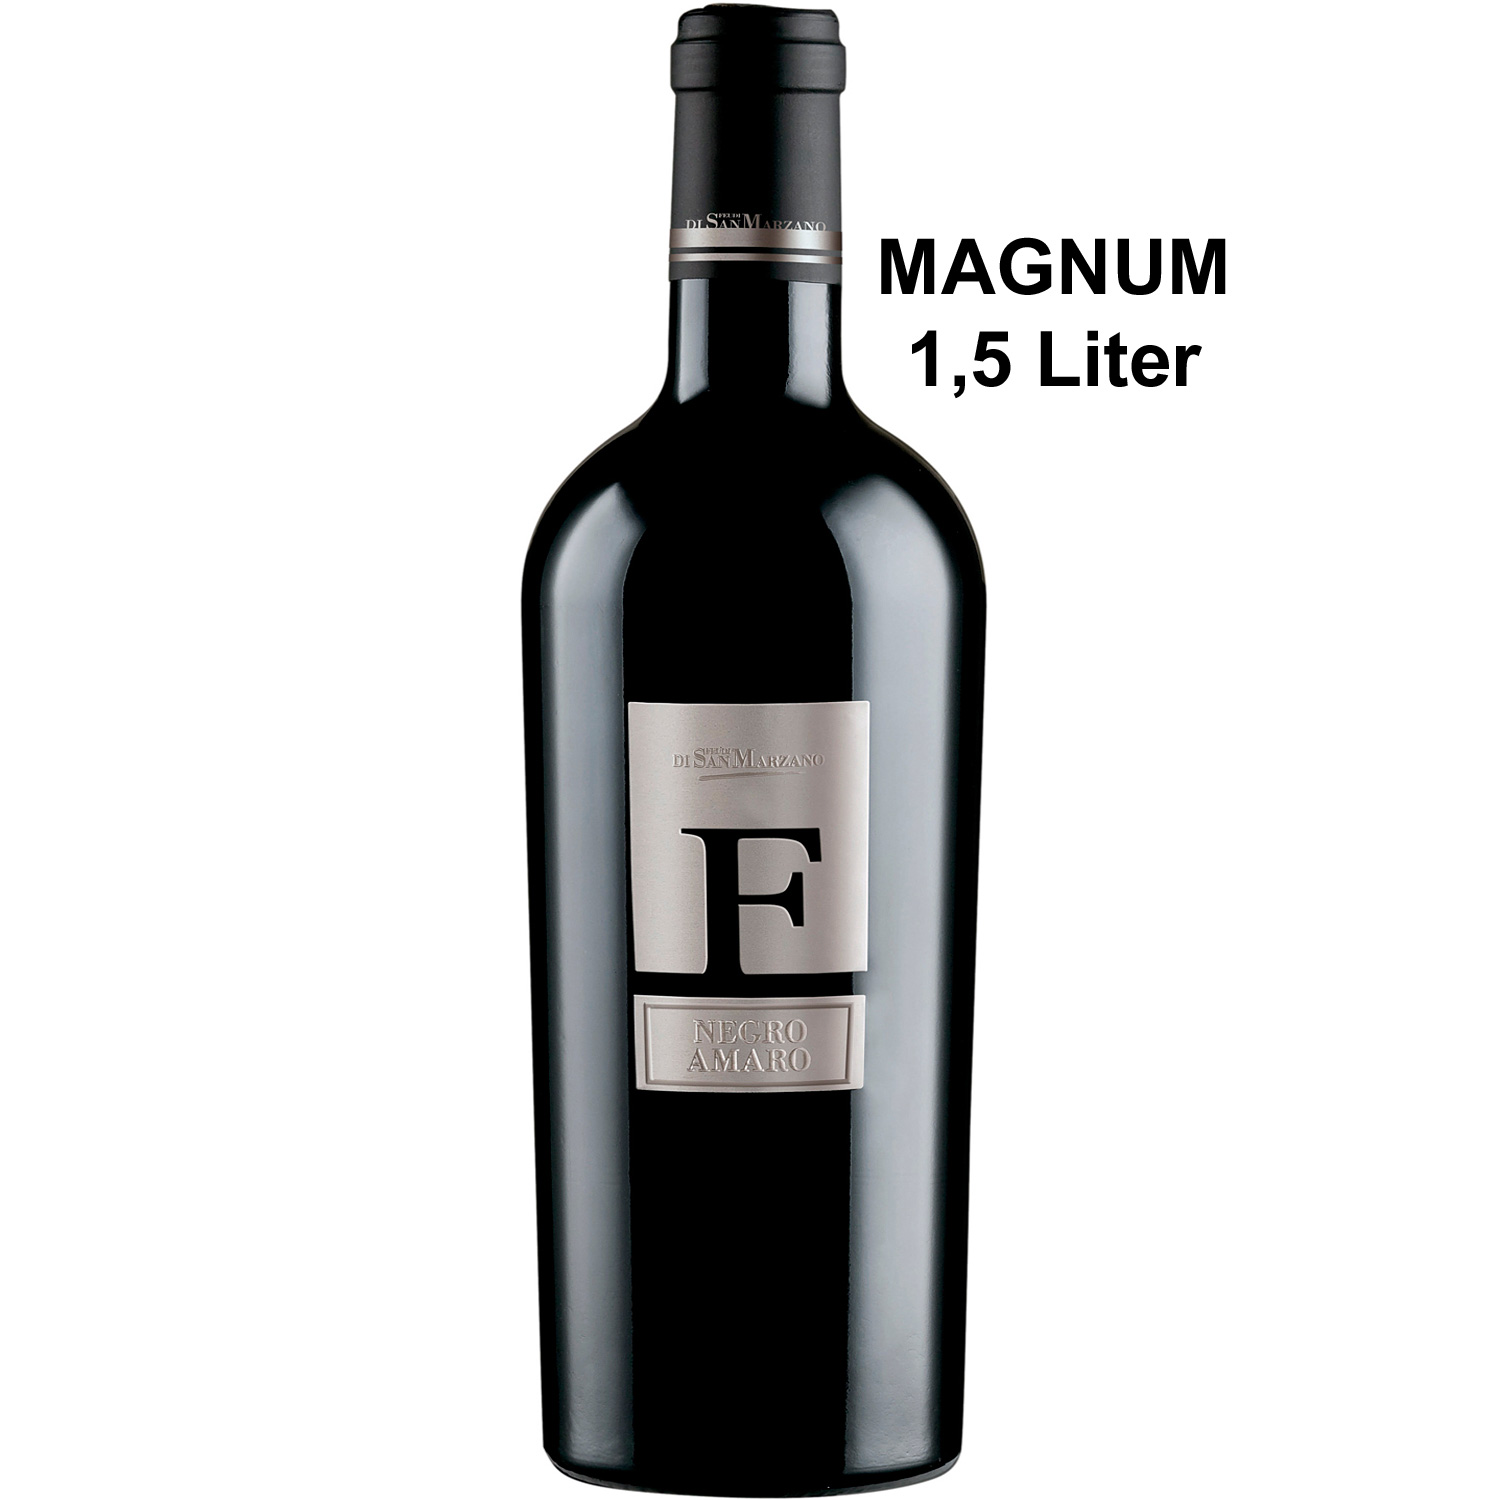 Italienischer Rotwein San Marzano Negroamaro F 2019 IGP Magnum 